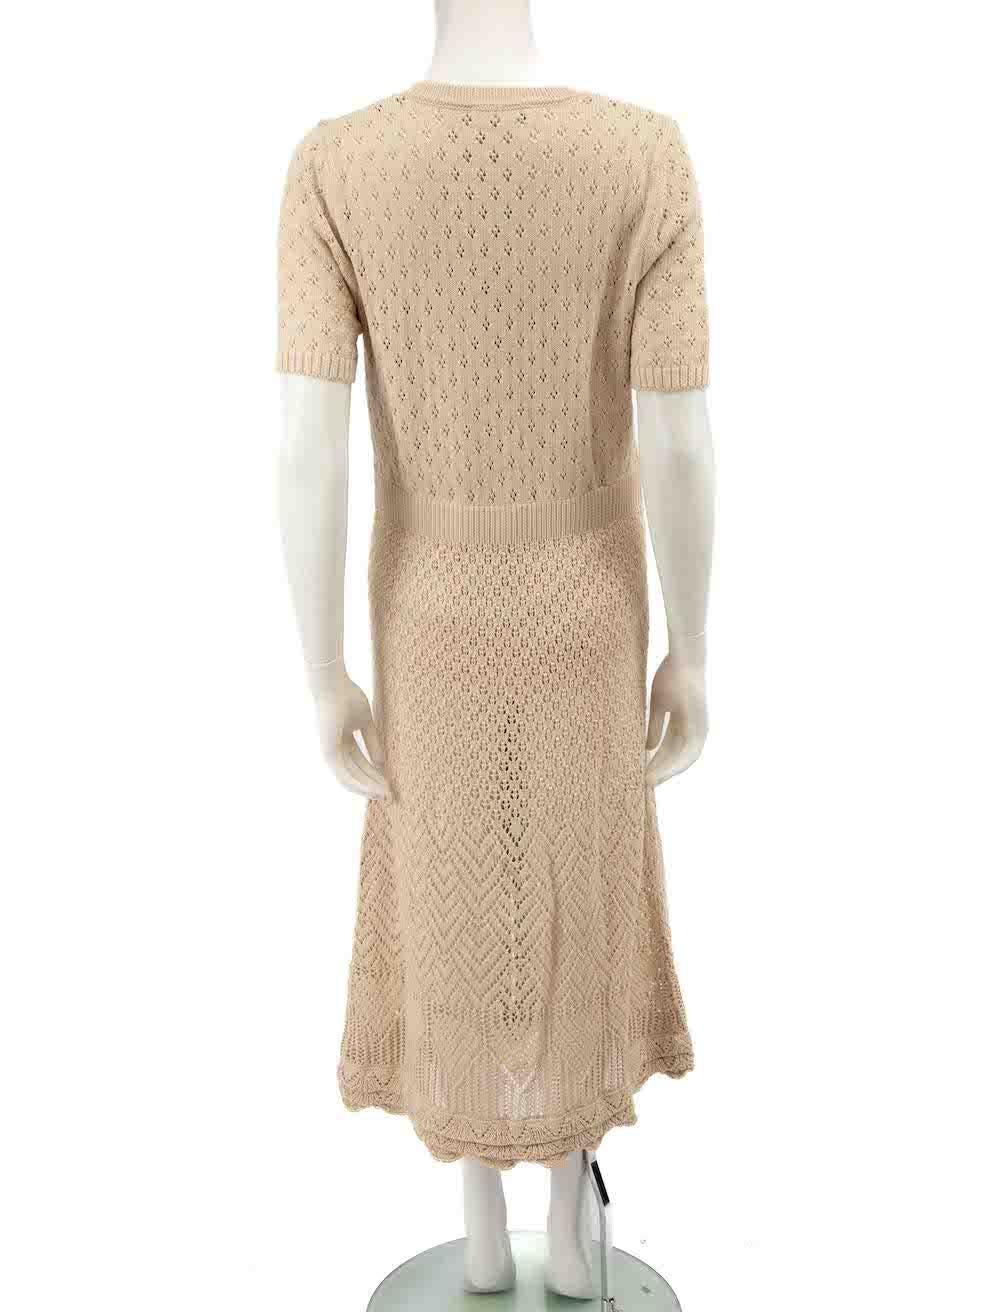 Altuzarra Beige Button Detail Knit Dress Size L In Excellent Condition For Sale In London, GB